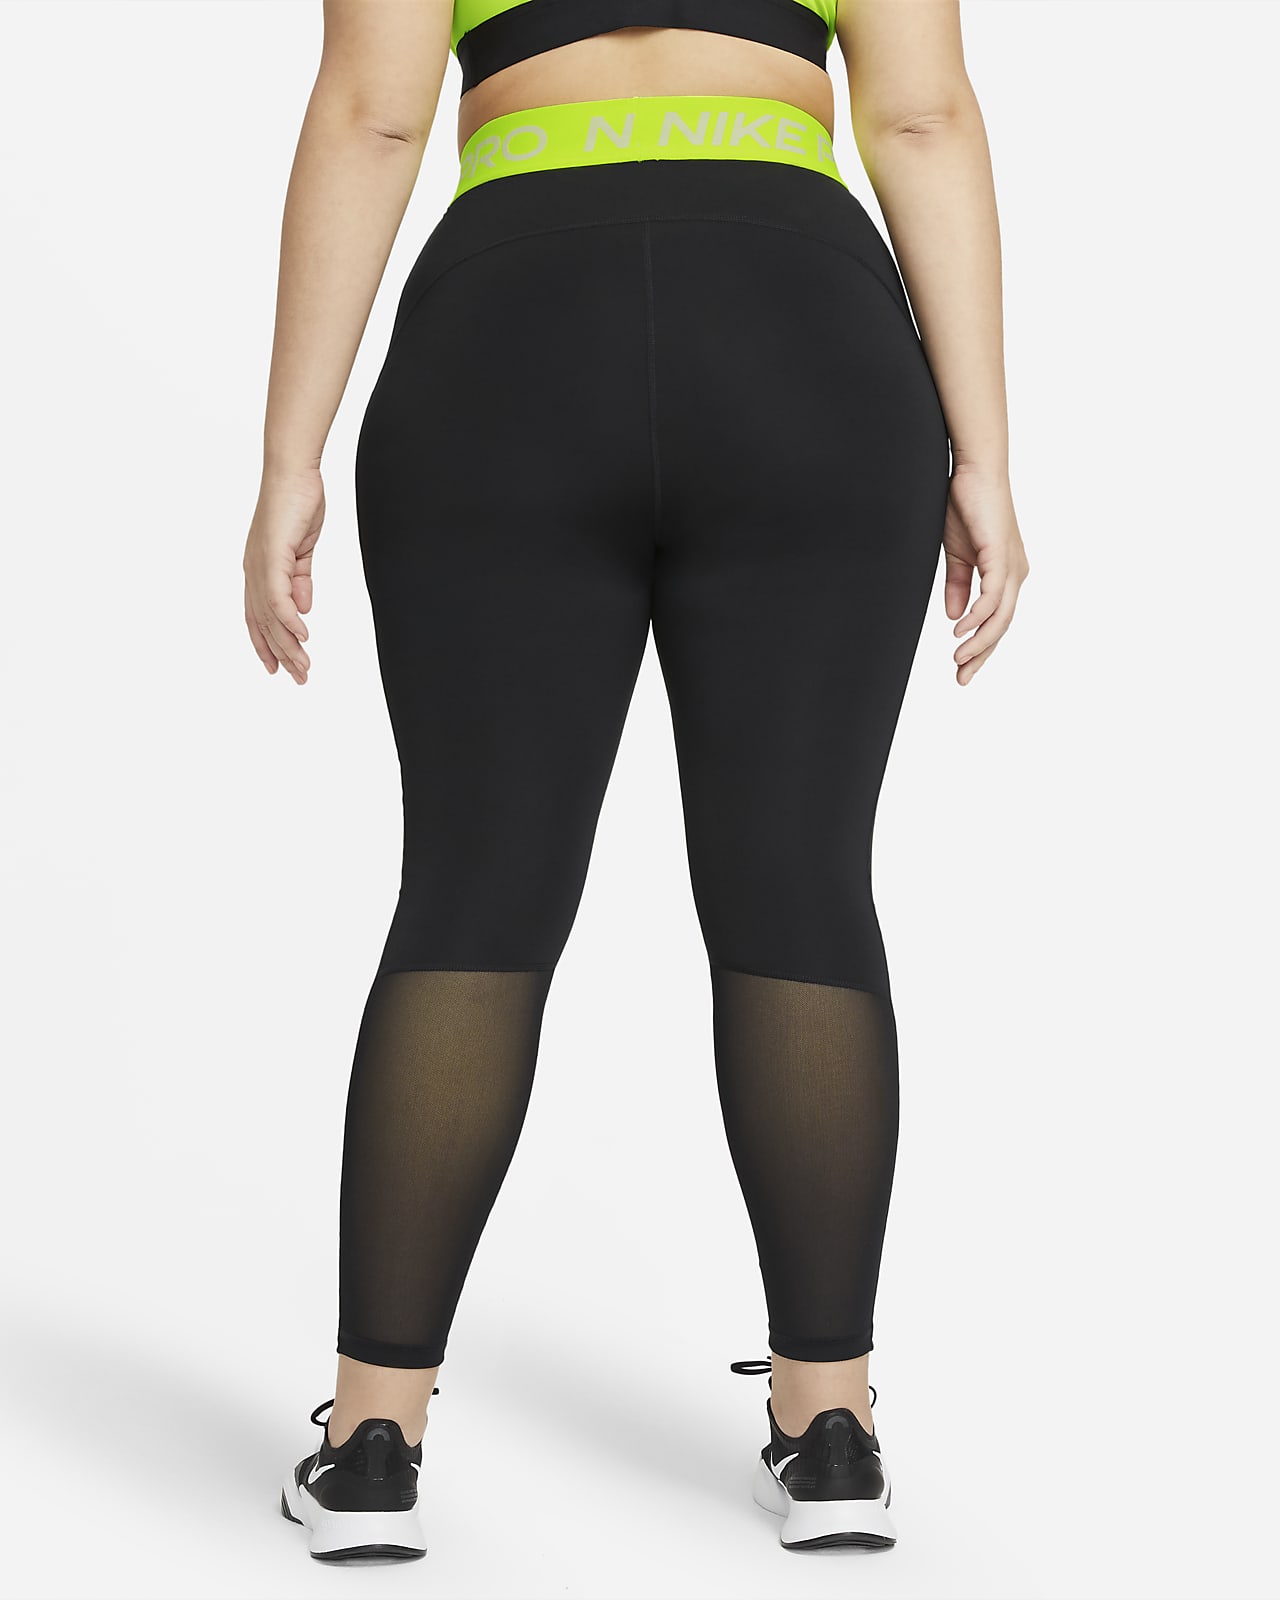 Core 10 + Core 10 Women's 'Build Your Own' Yoga Pant Full-Length Legging (XS-XL,  Plus Size 1X-3X)